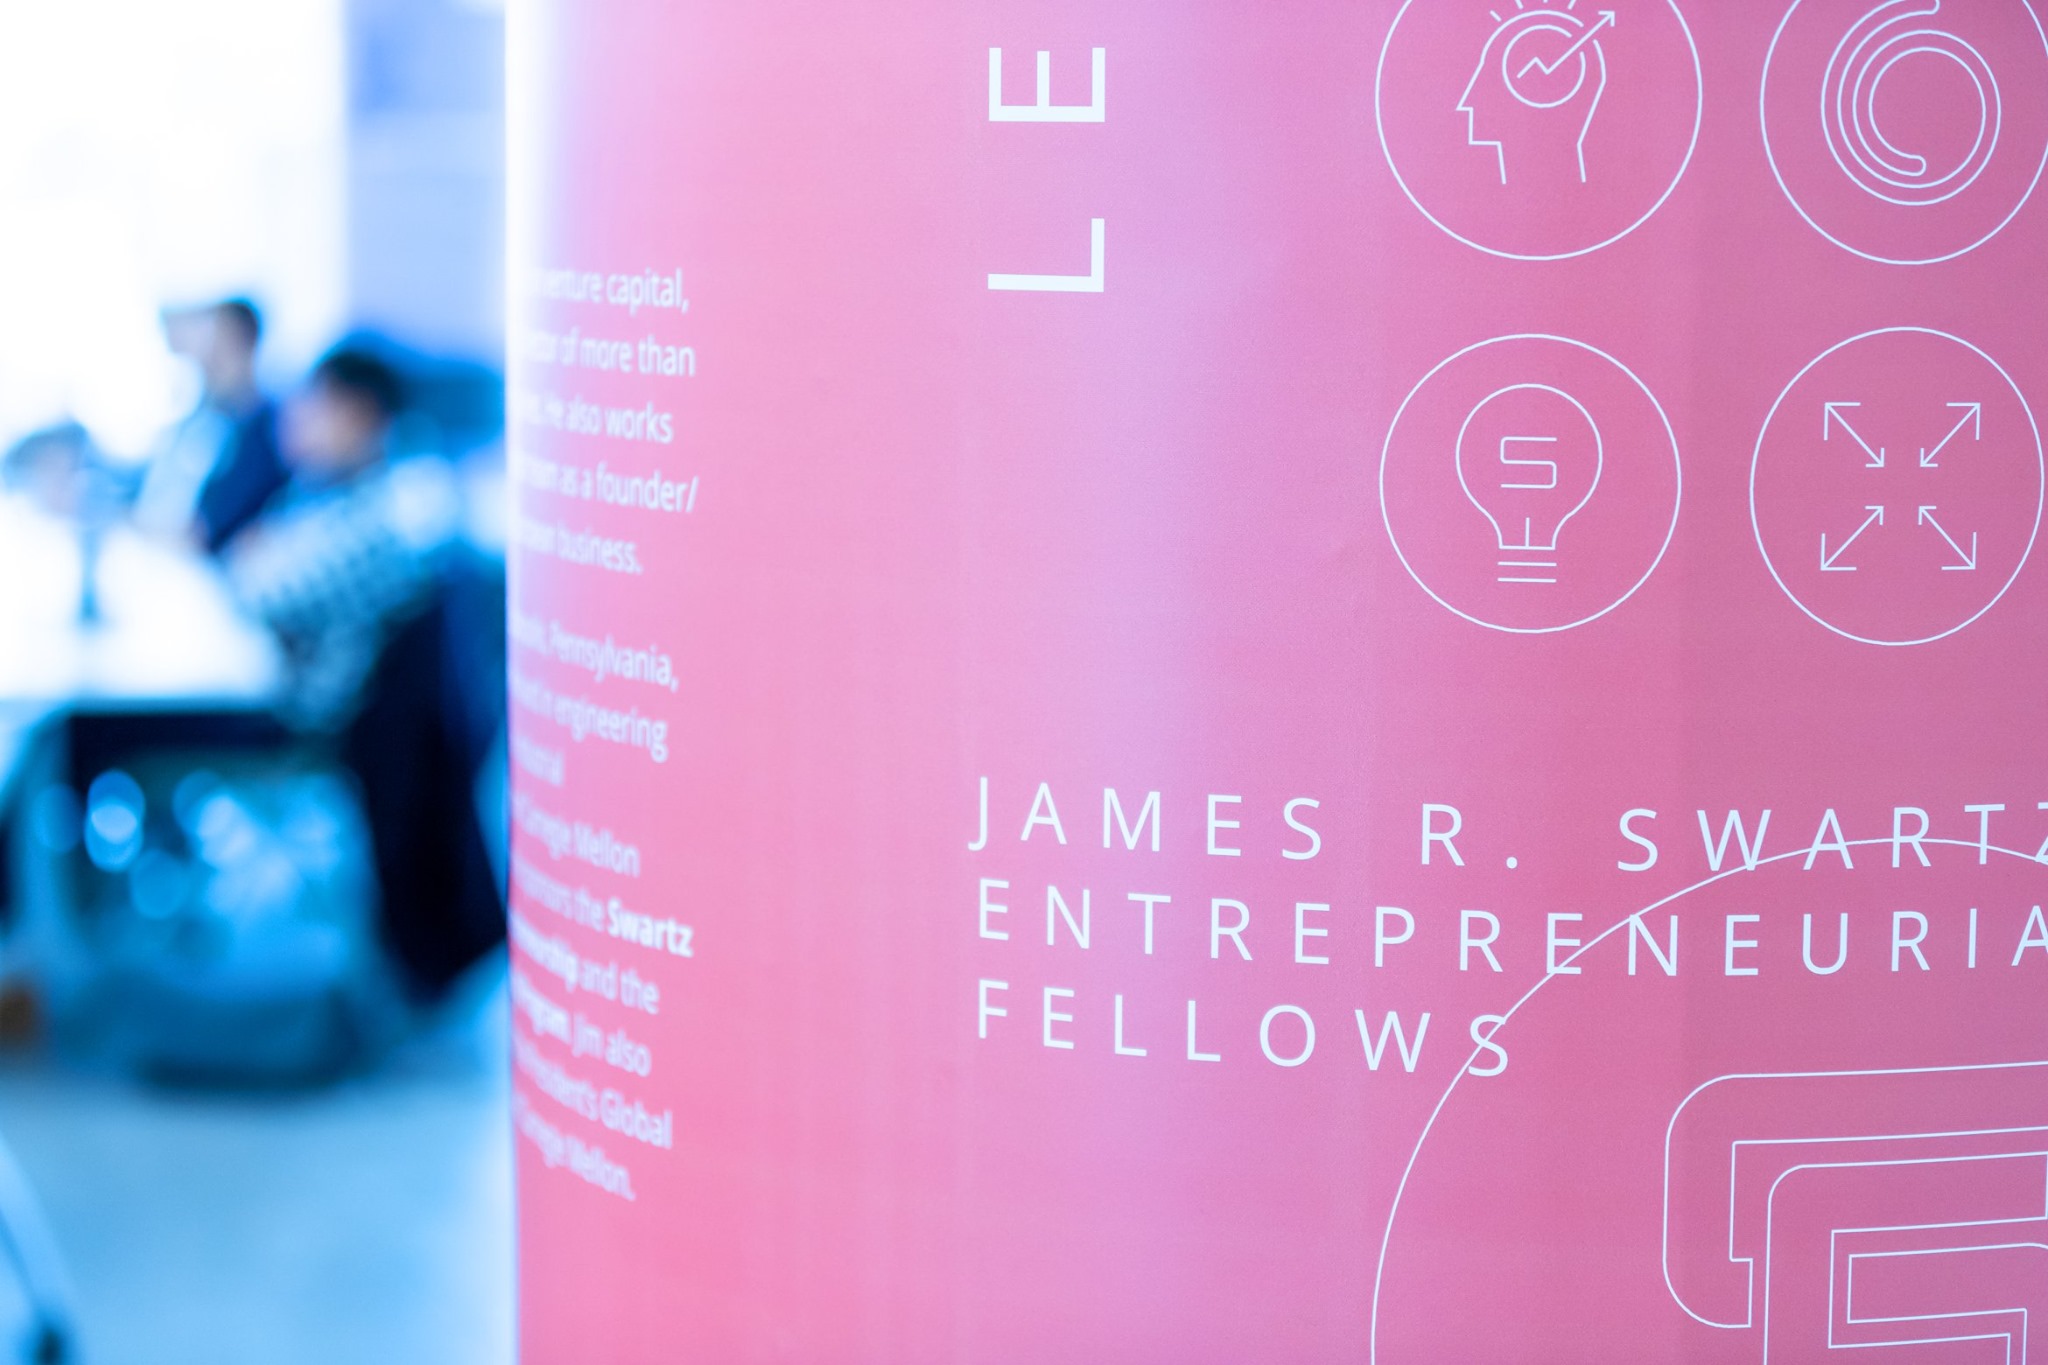 James R Swartz Fellows Banner